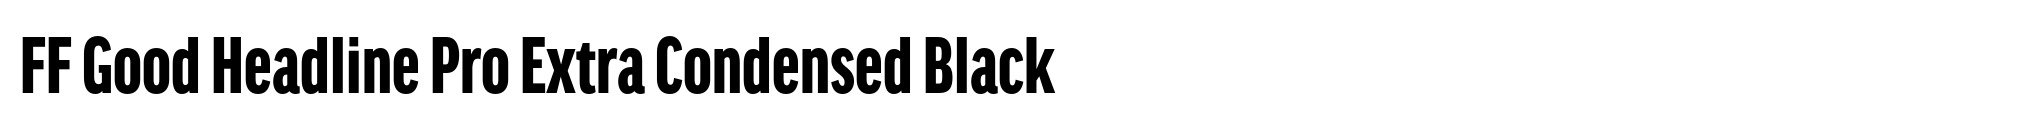 FF Good Headline Pro Extra Condensed Black image